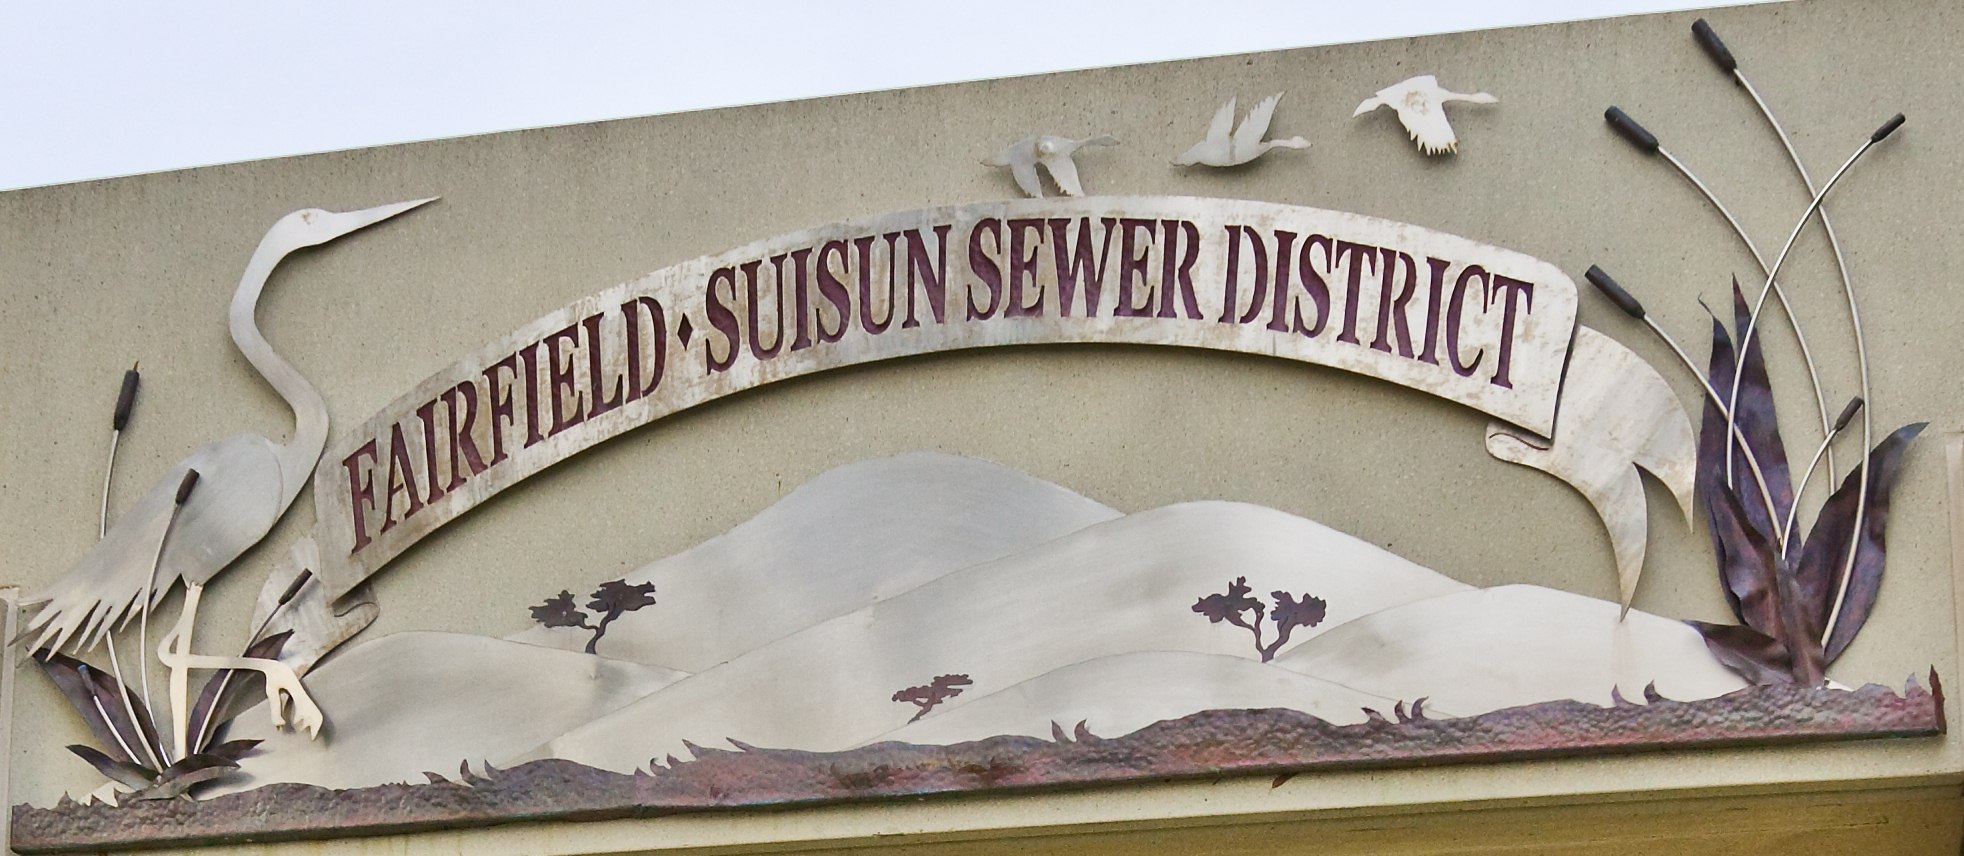 Fairfield-Suisun Sewer District